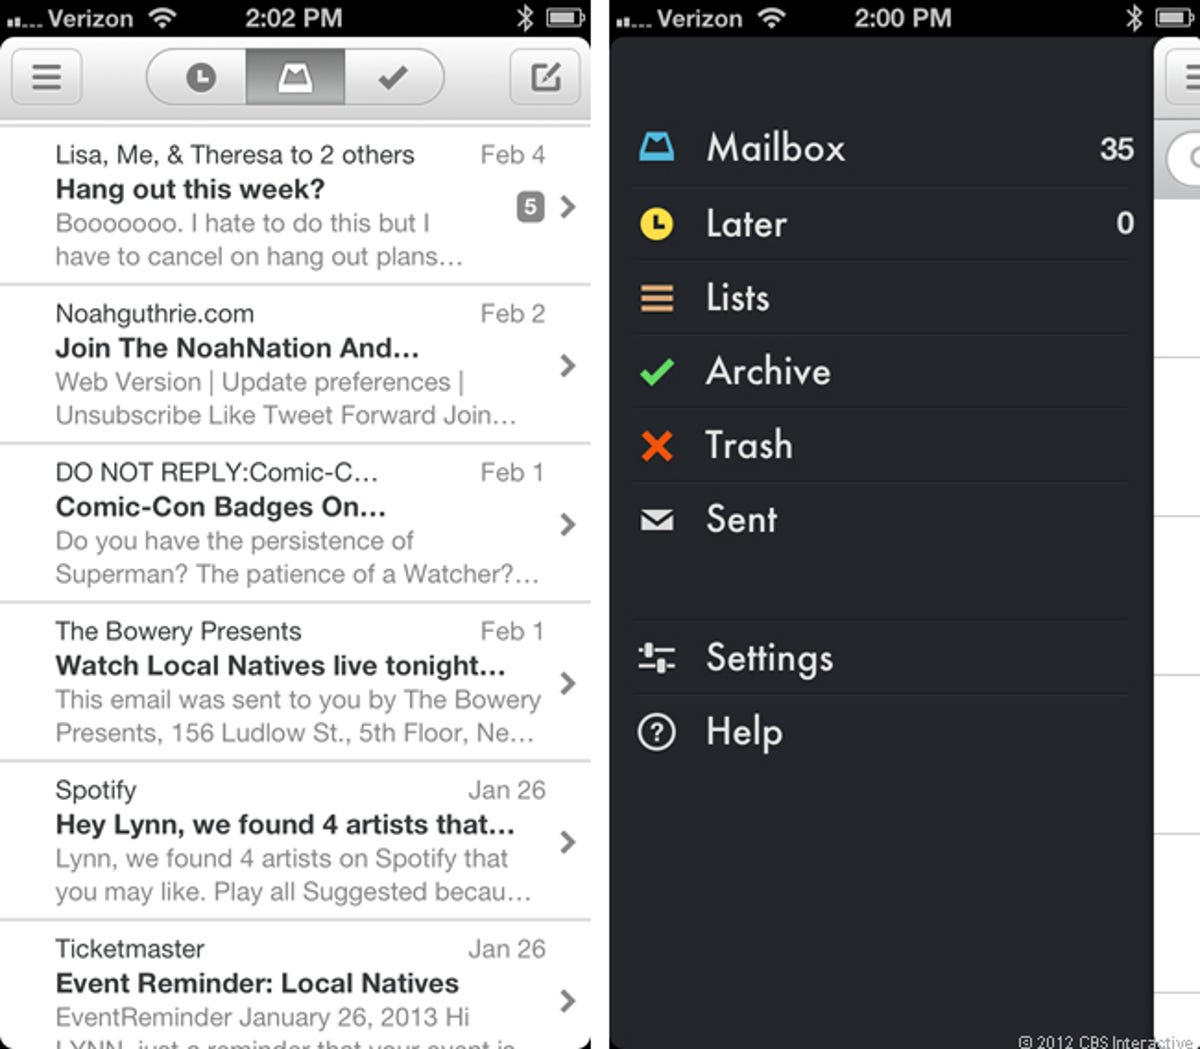 Mailbox (iOS) - basic interface